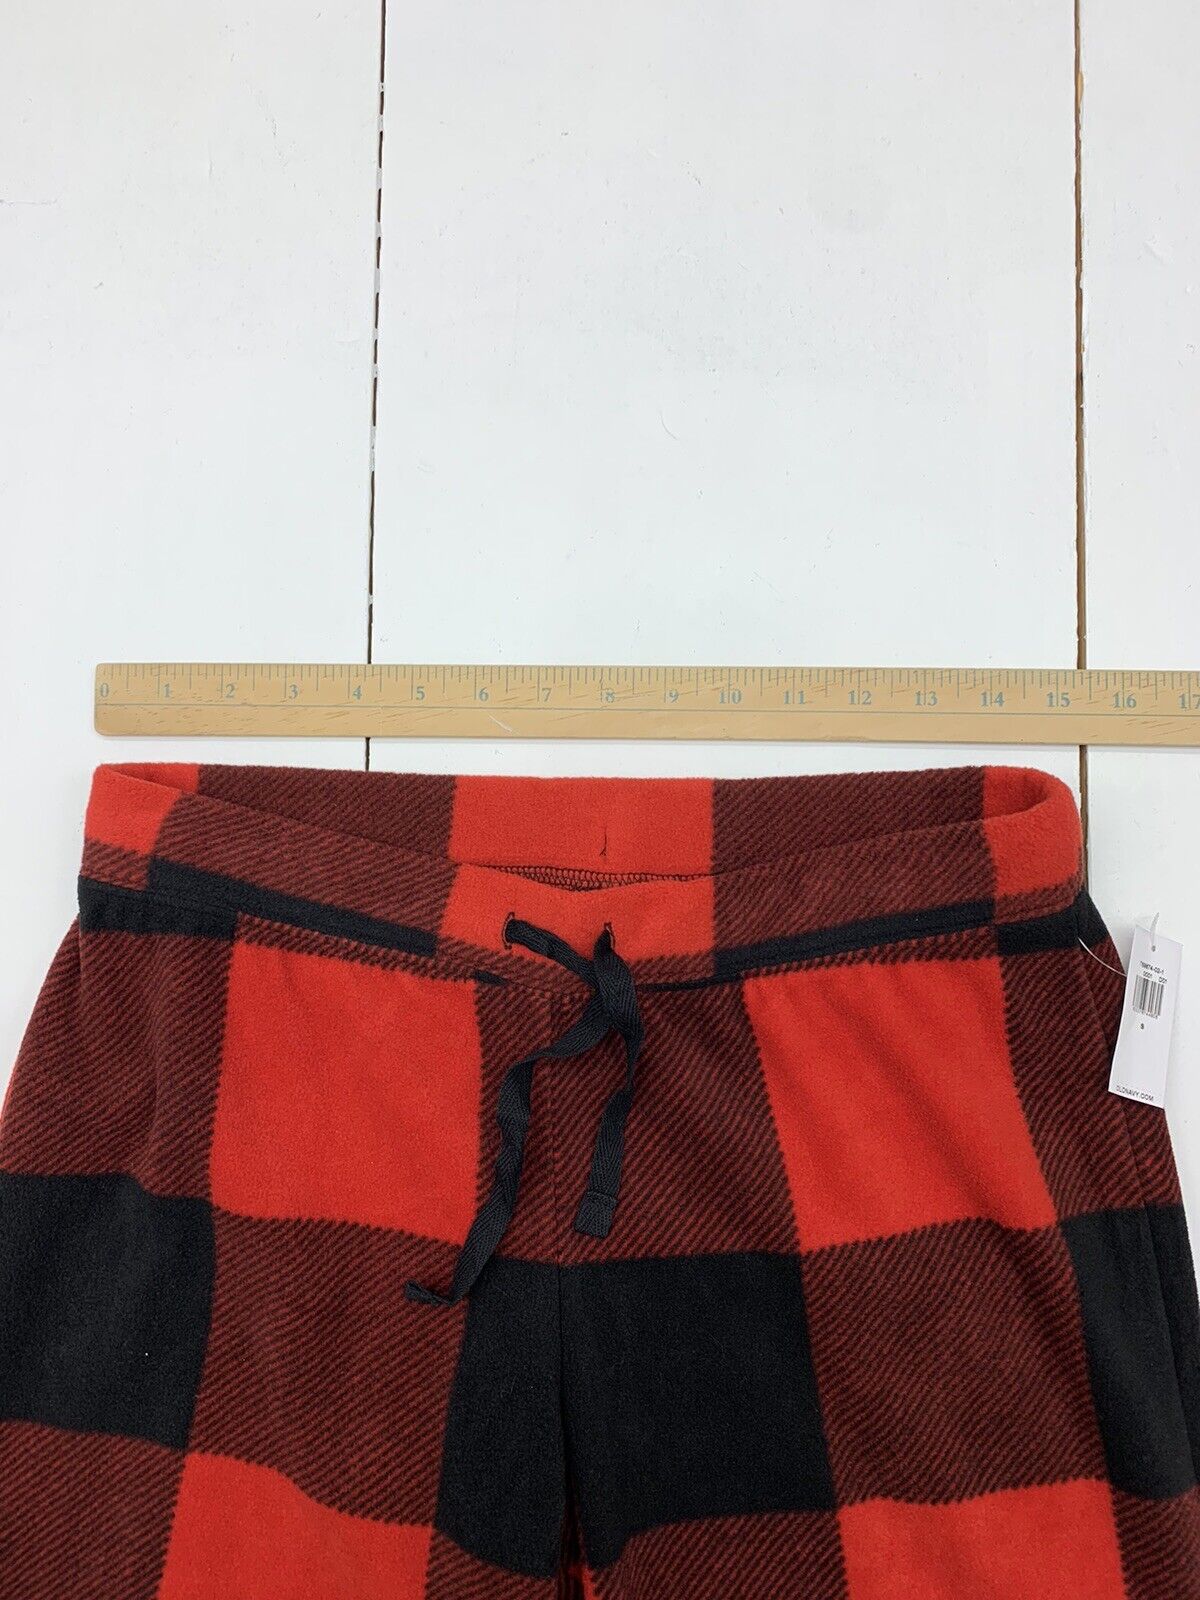 Old Navy Womens Red Black Plaid Pajama Shorts Size Large - beyond exchange